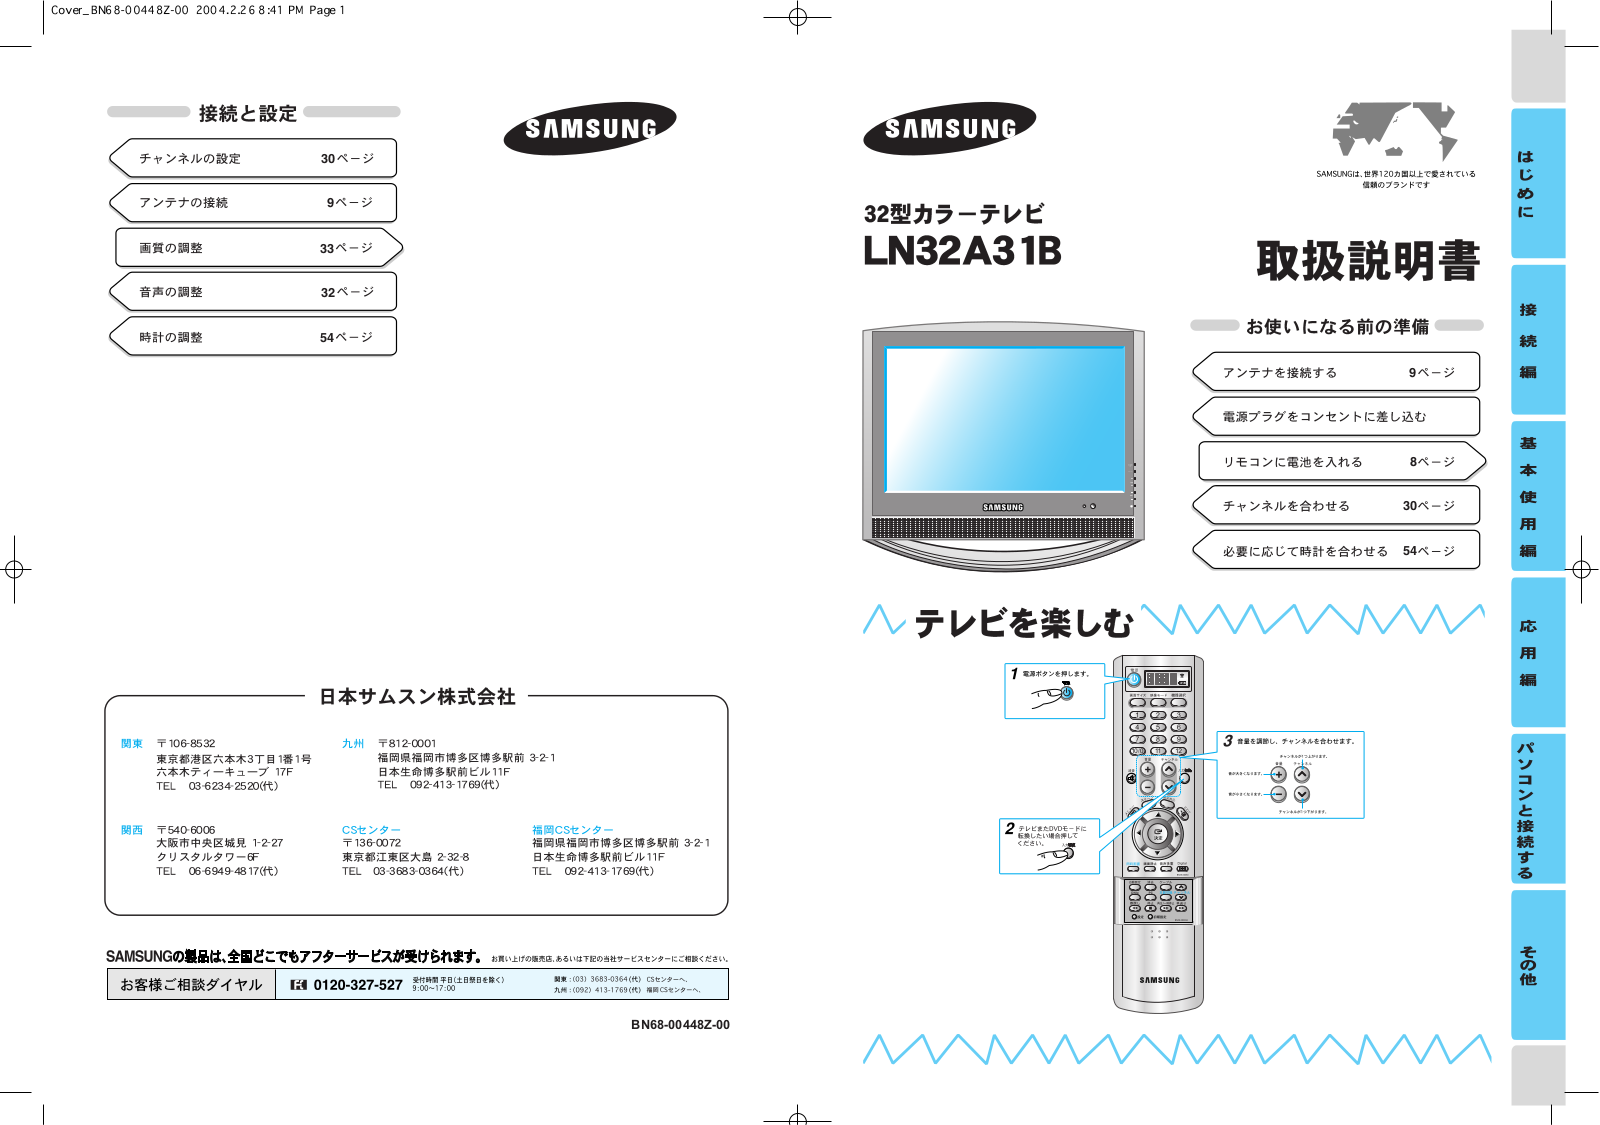 Samsung LN32A31B OPEN SOURCE GUIDE